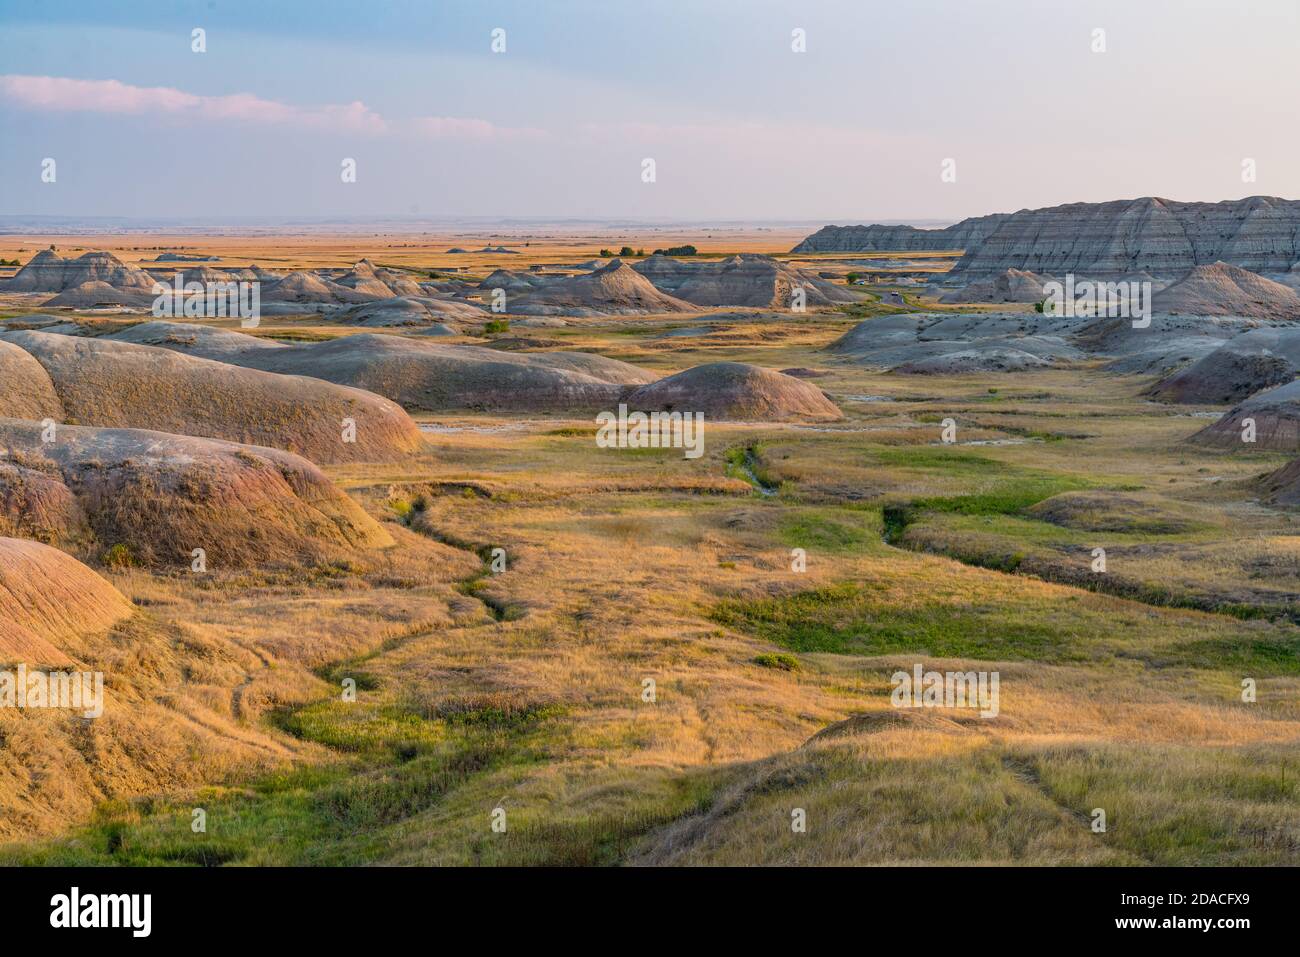 Parco nazionale Badlands nel South Dakota Foto Stock